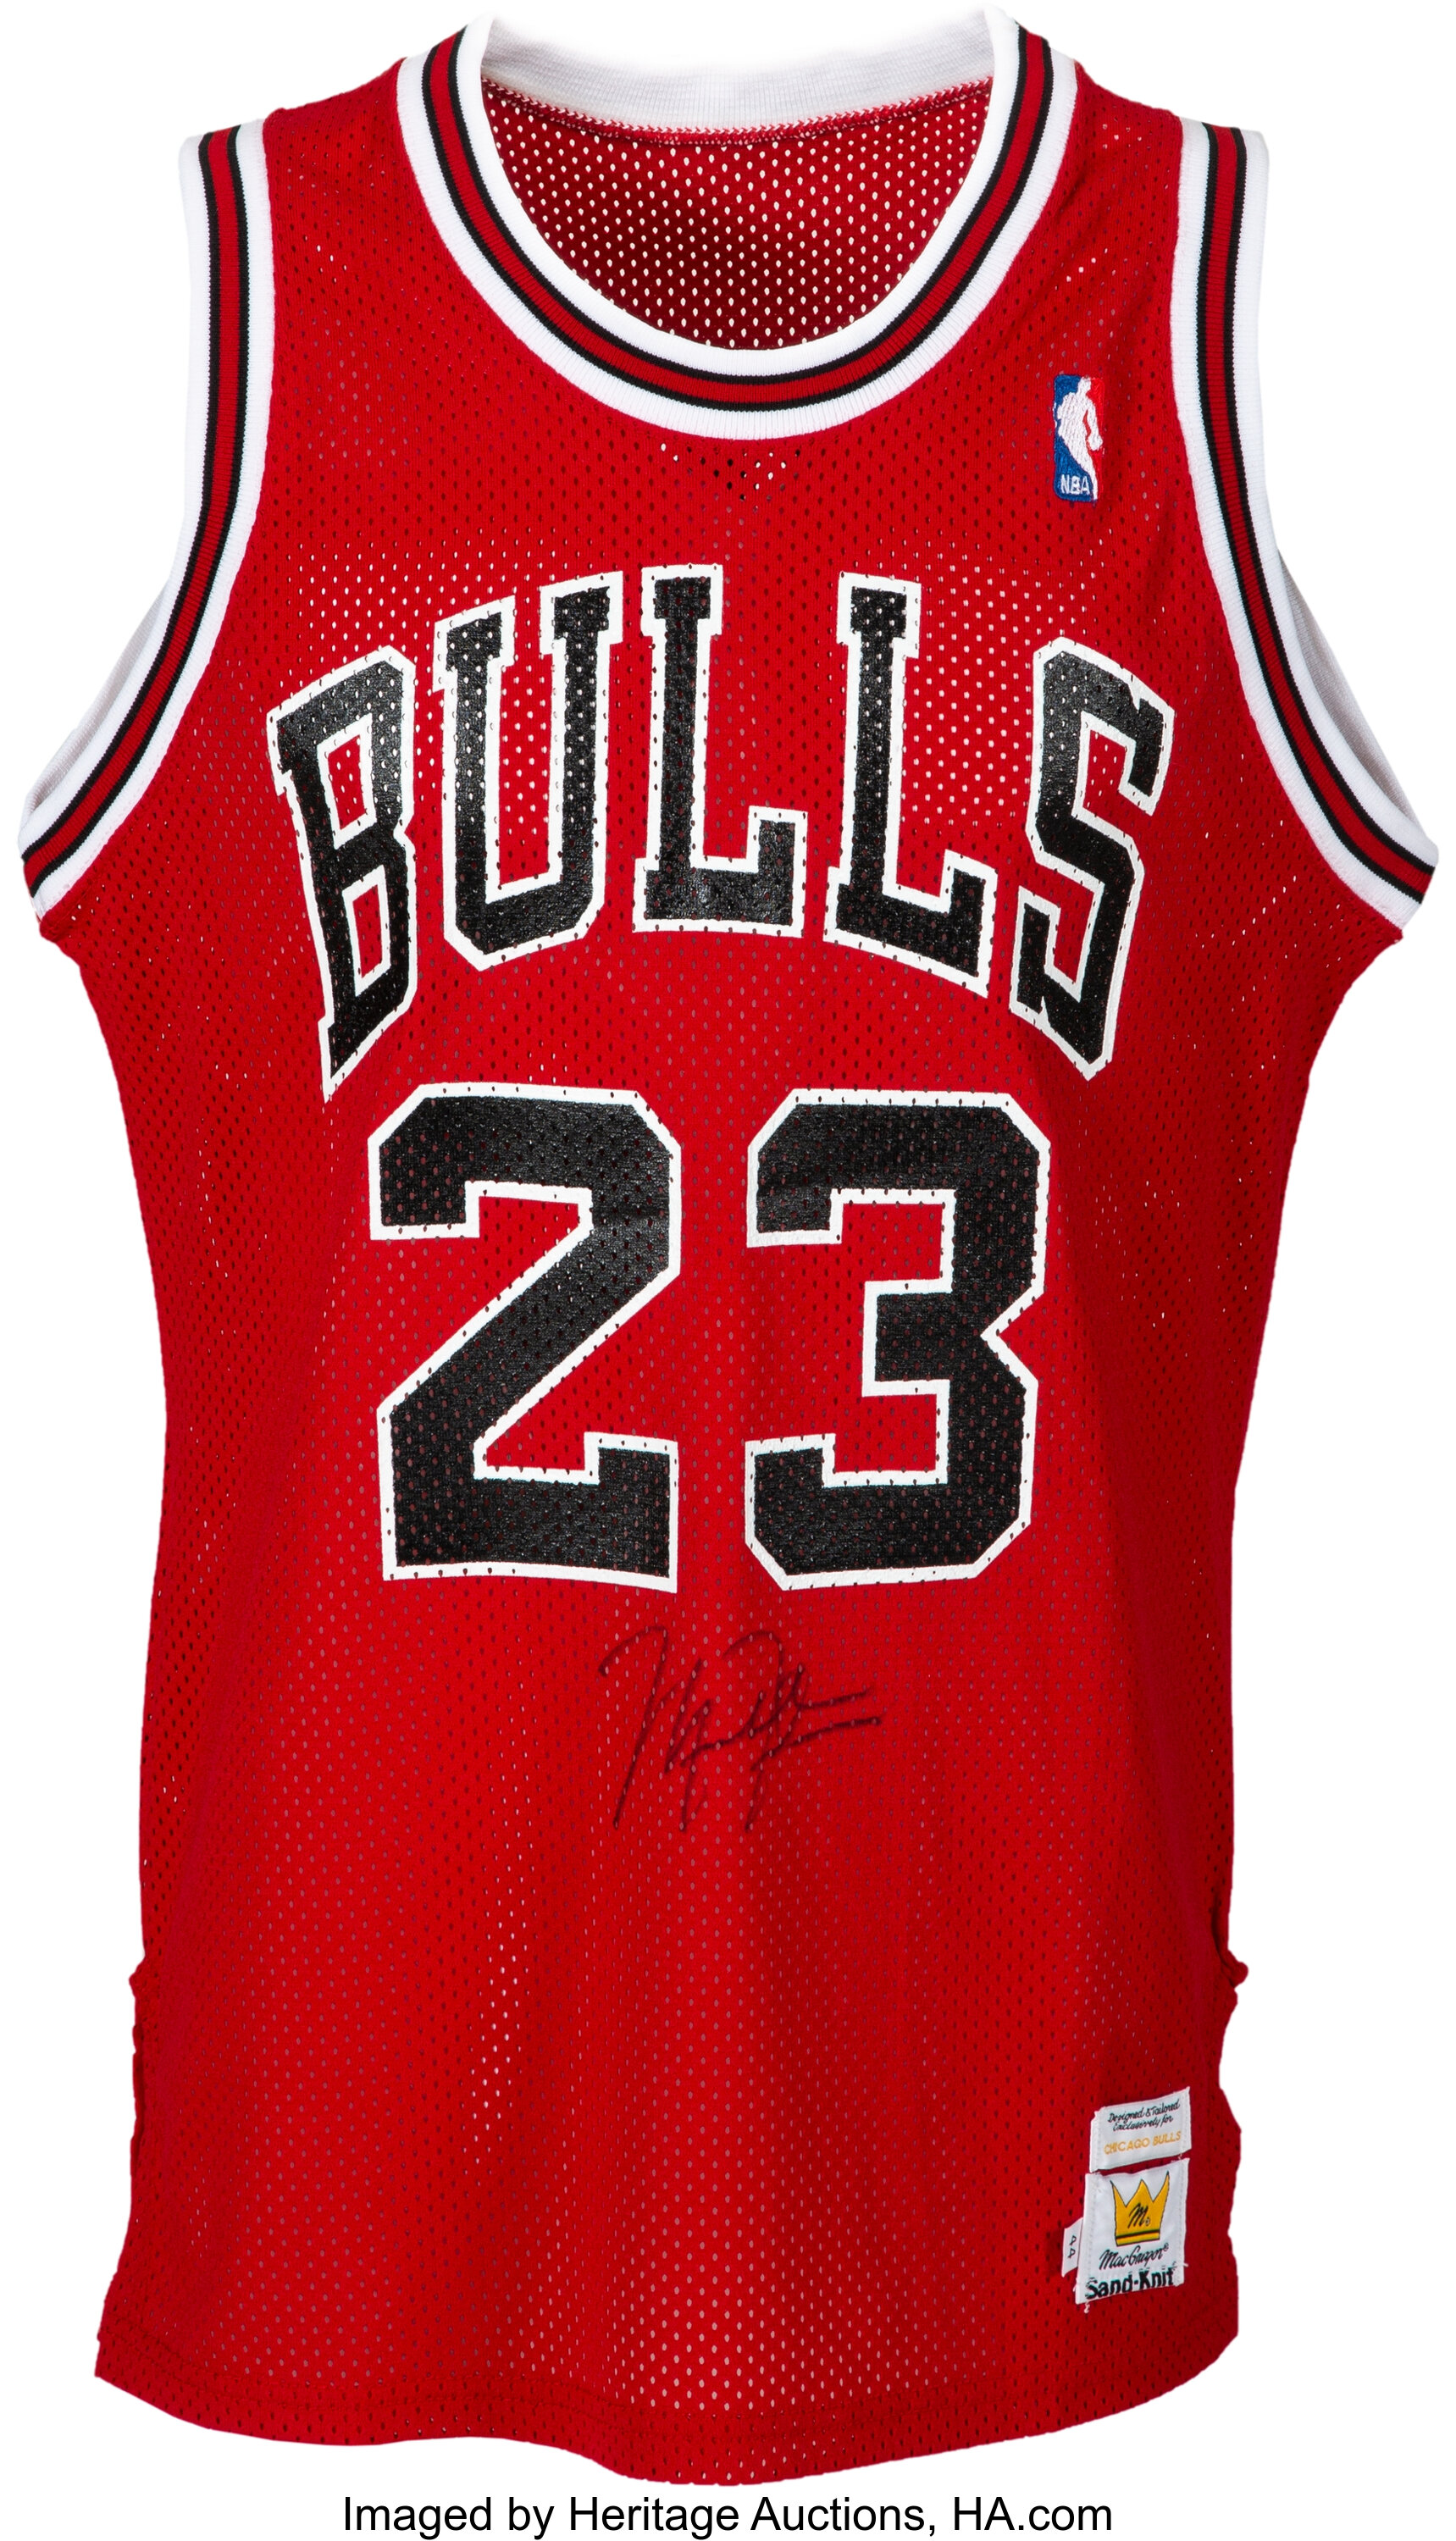 Michael Jordan 23 Chicago Bulls Basketball Signature Shirt